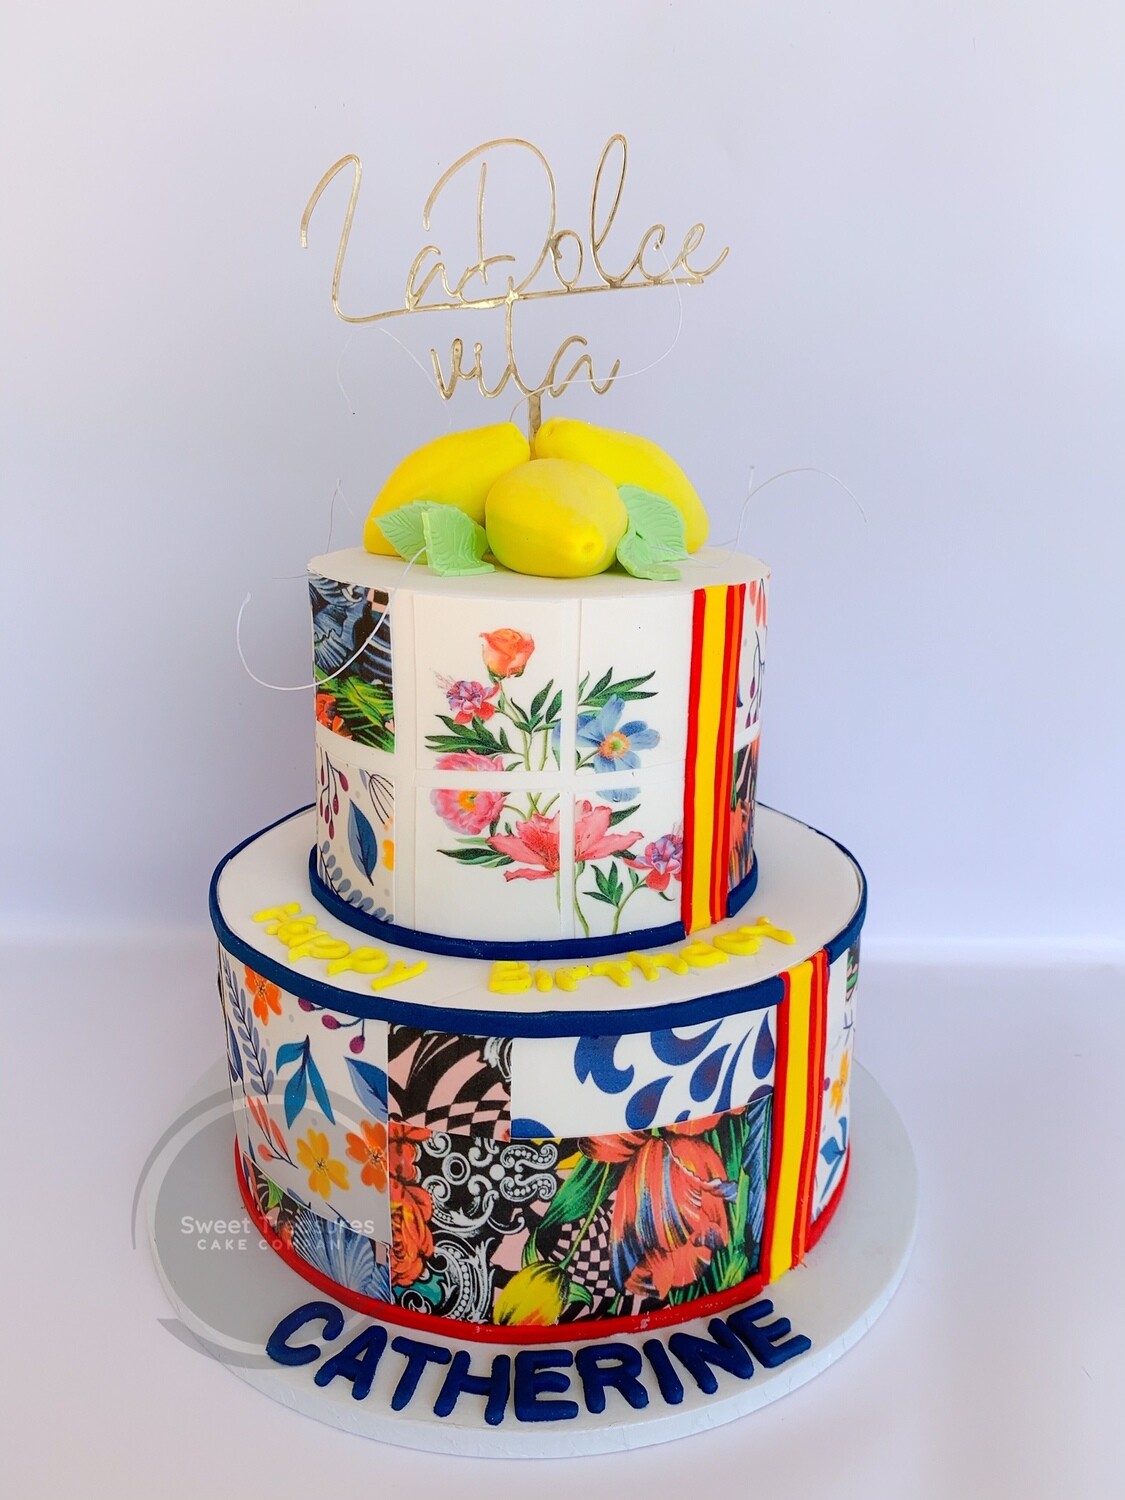 La dolce vita 2 tier cake